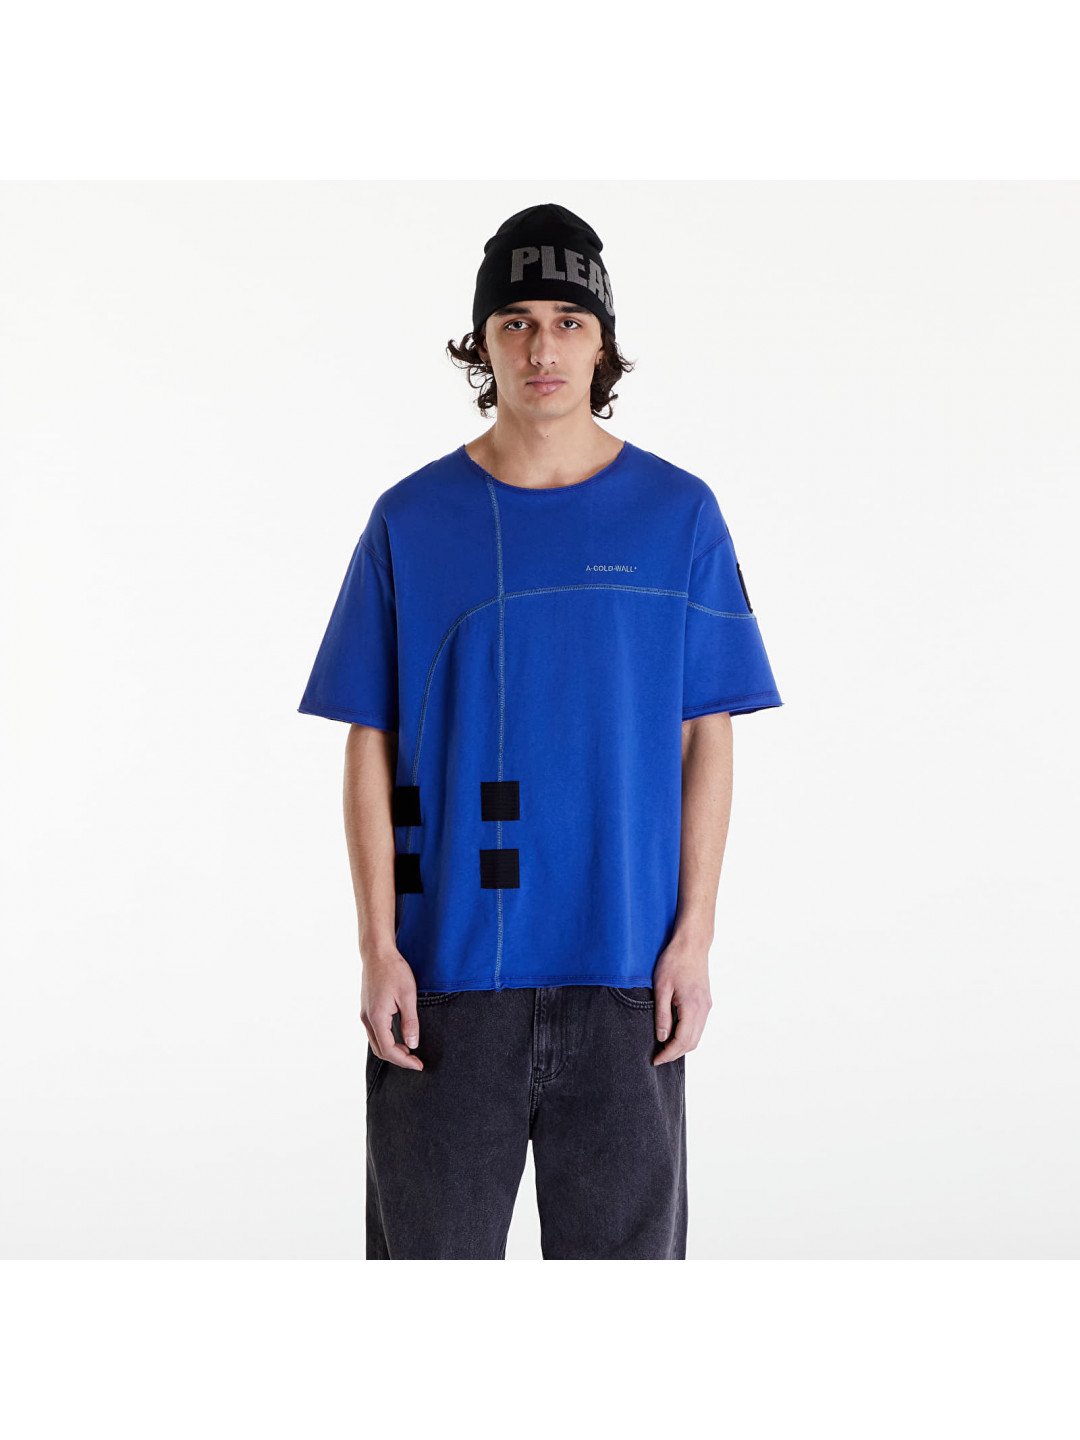 A-COLD-WALL Intersect T-Shirt Volt Blue